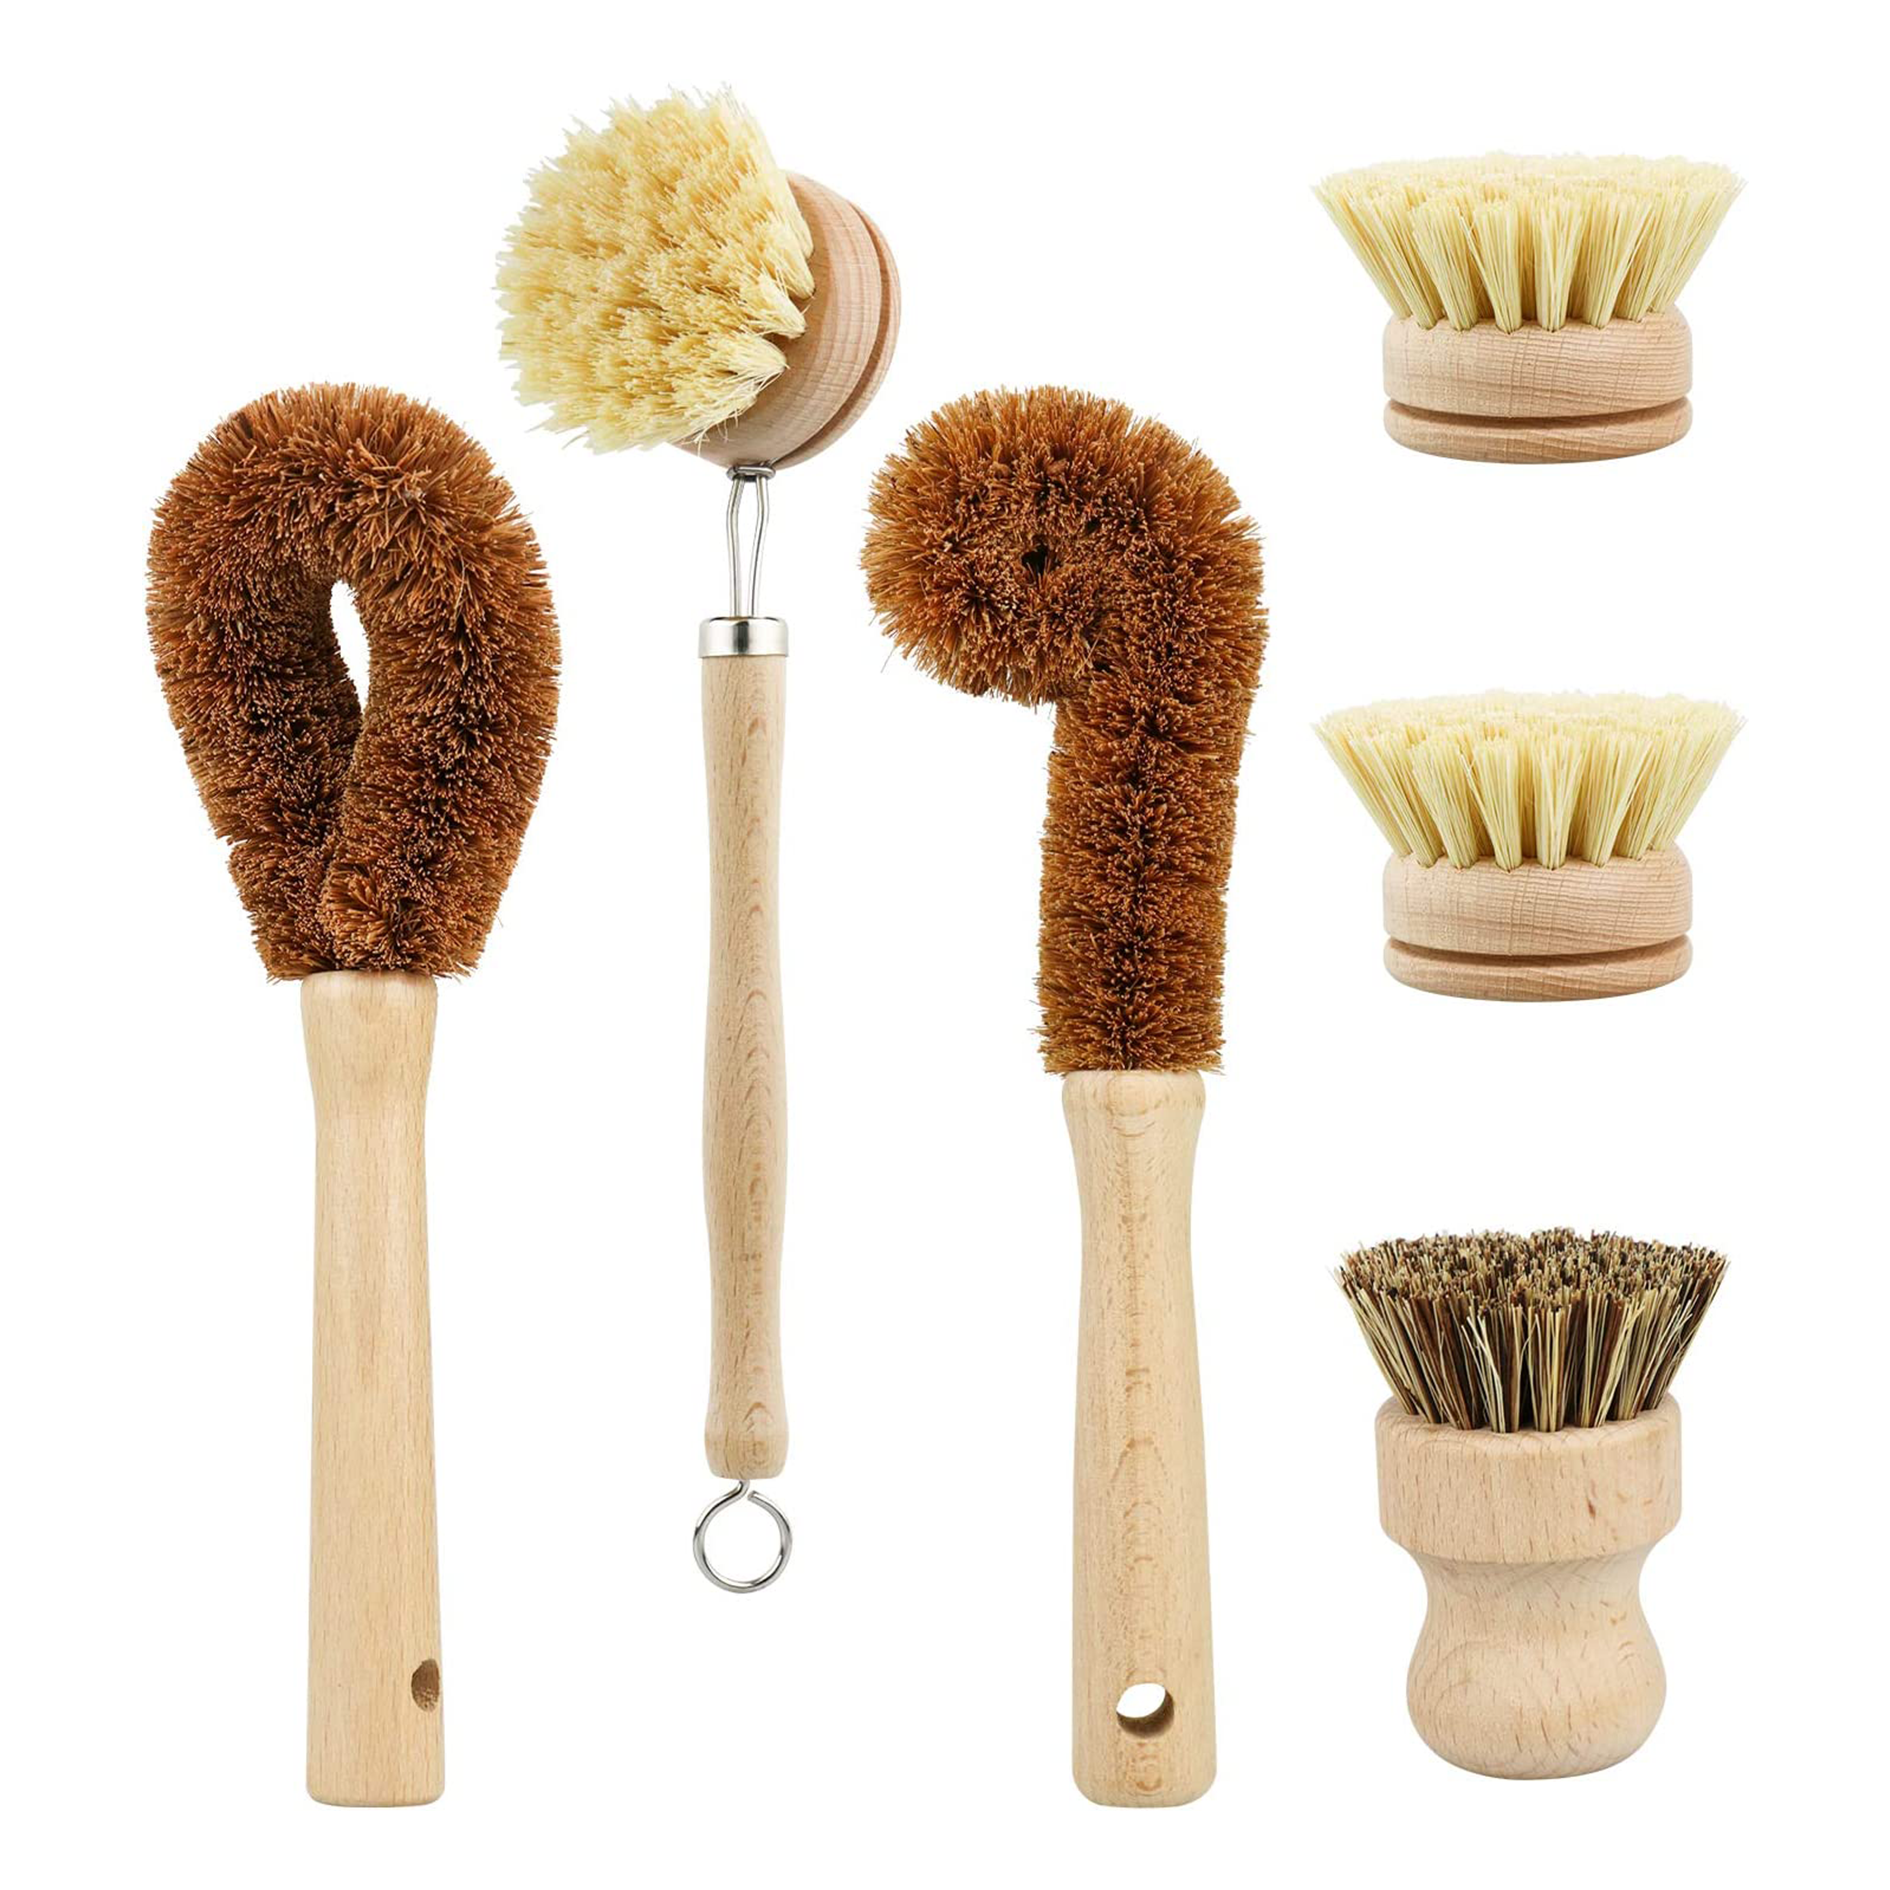 Cleaning brush set